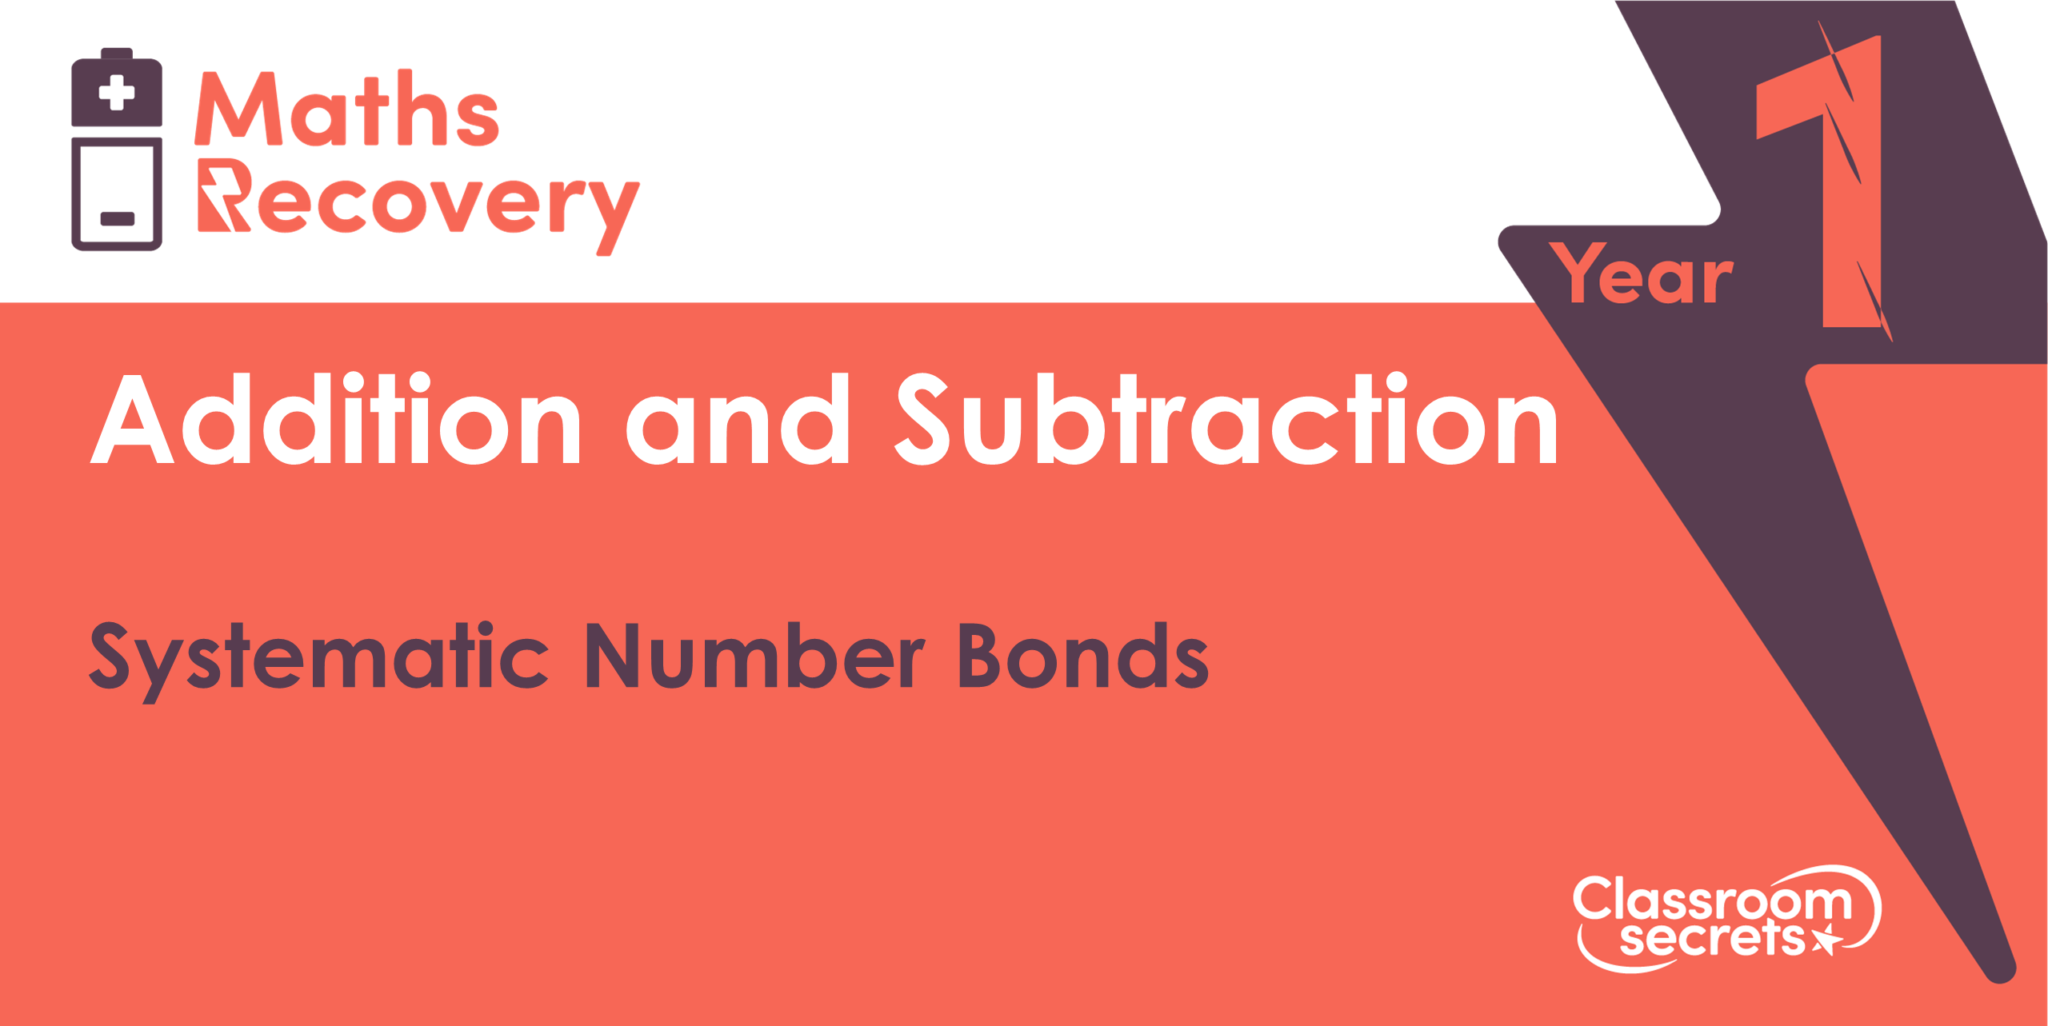 05-systematic-number-bonds-classroom-secrets